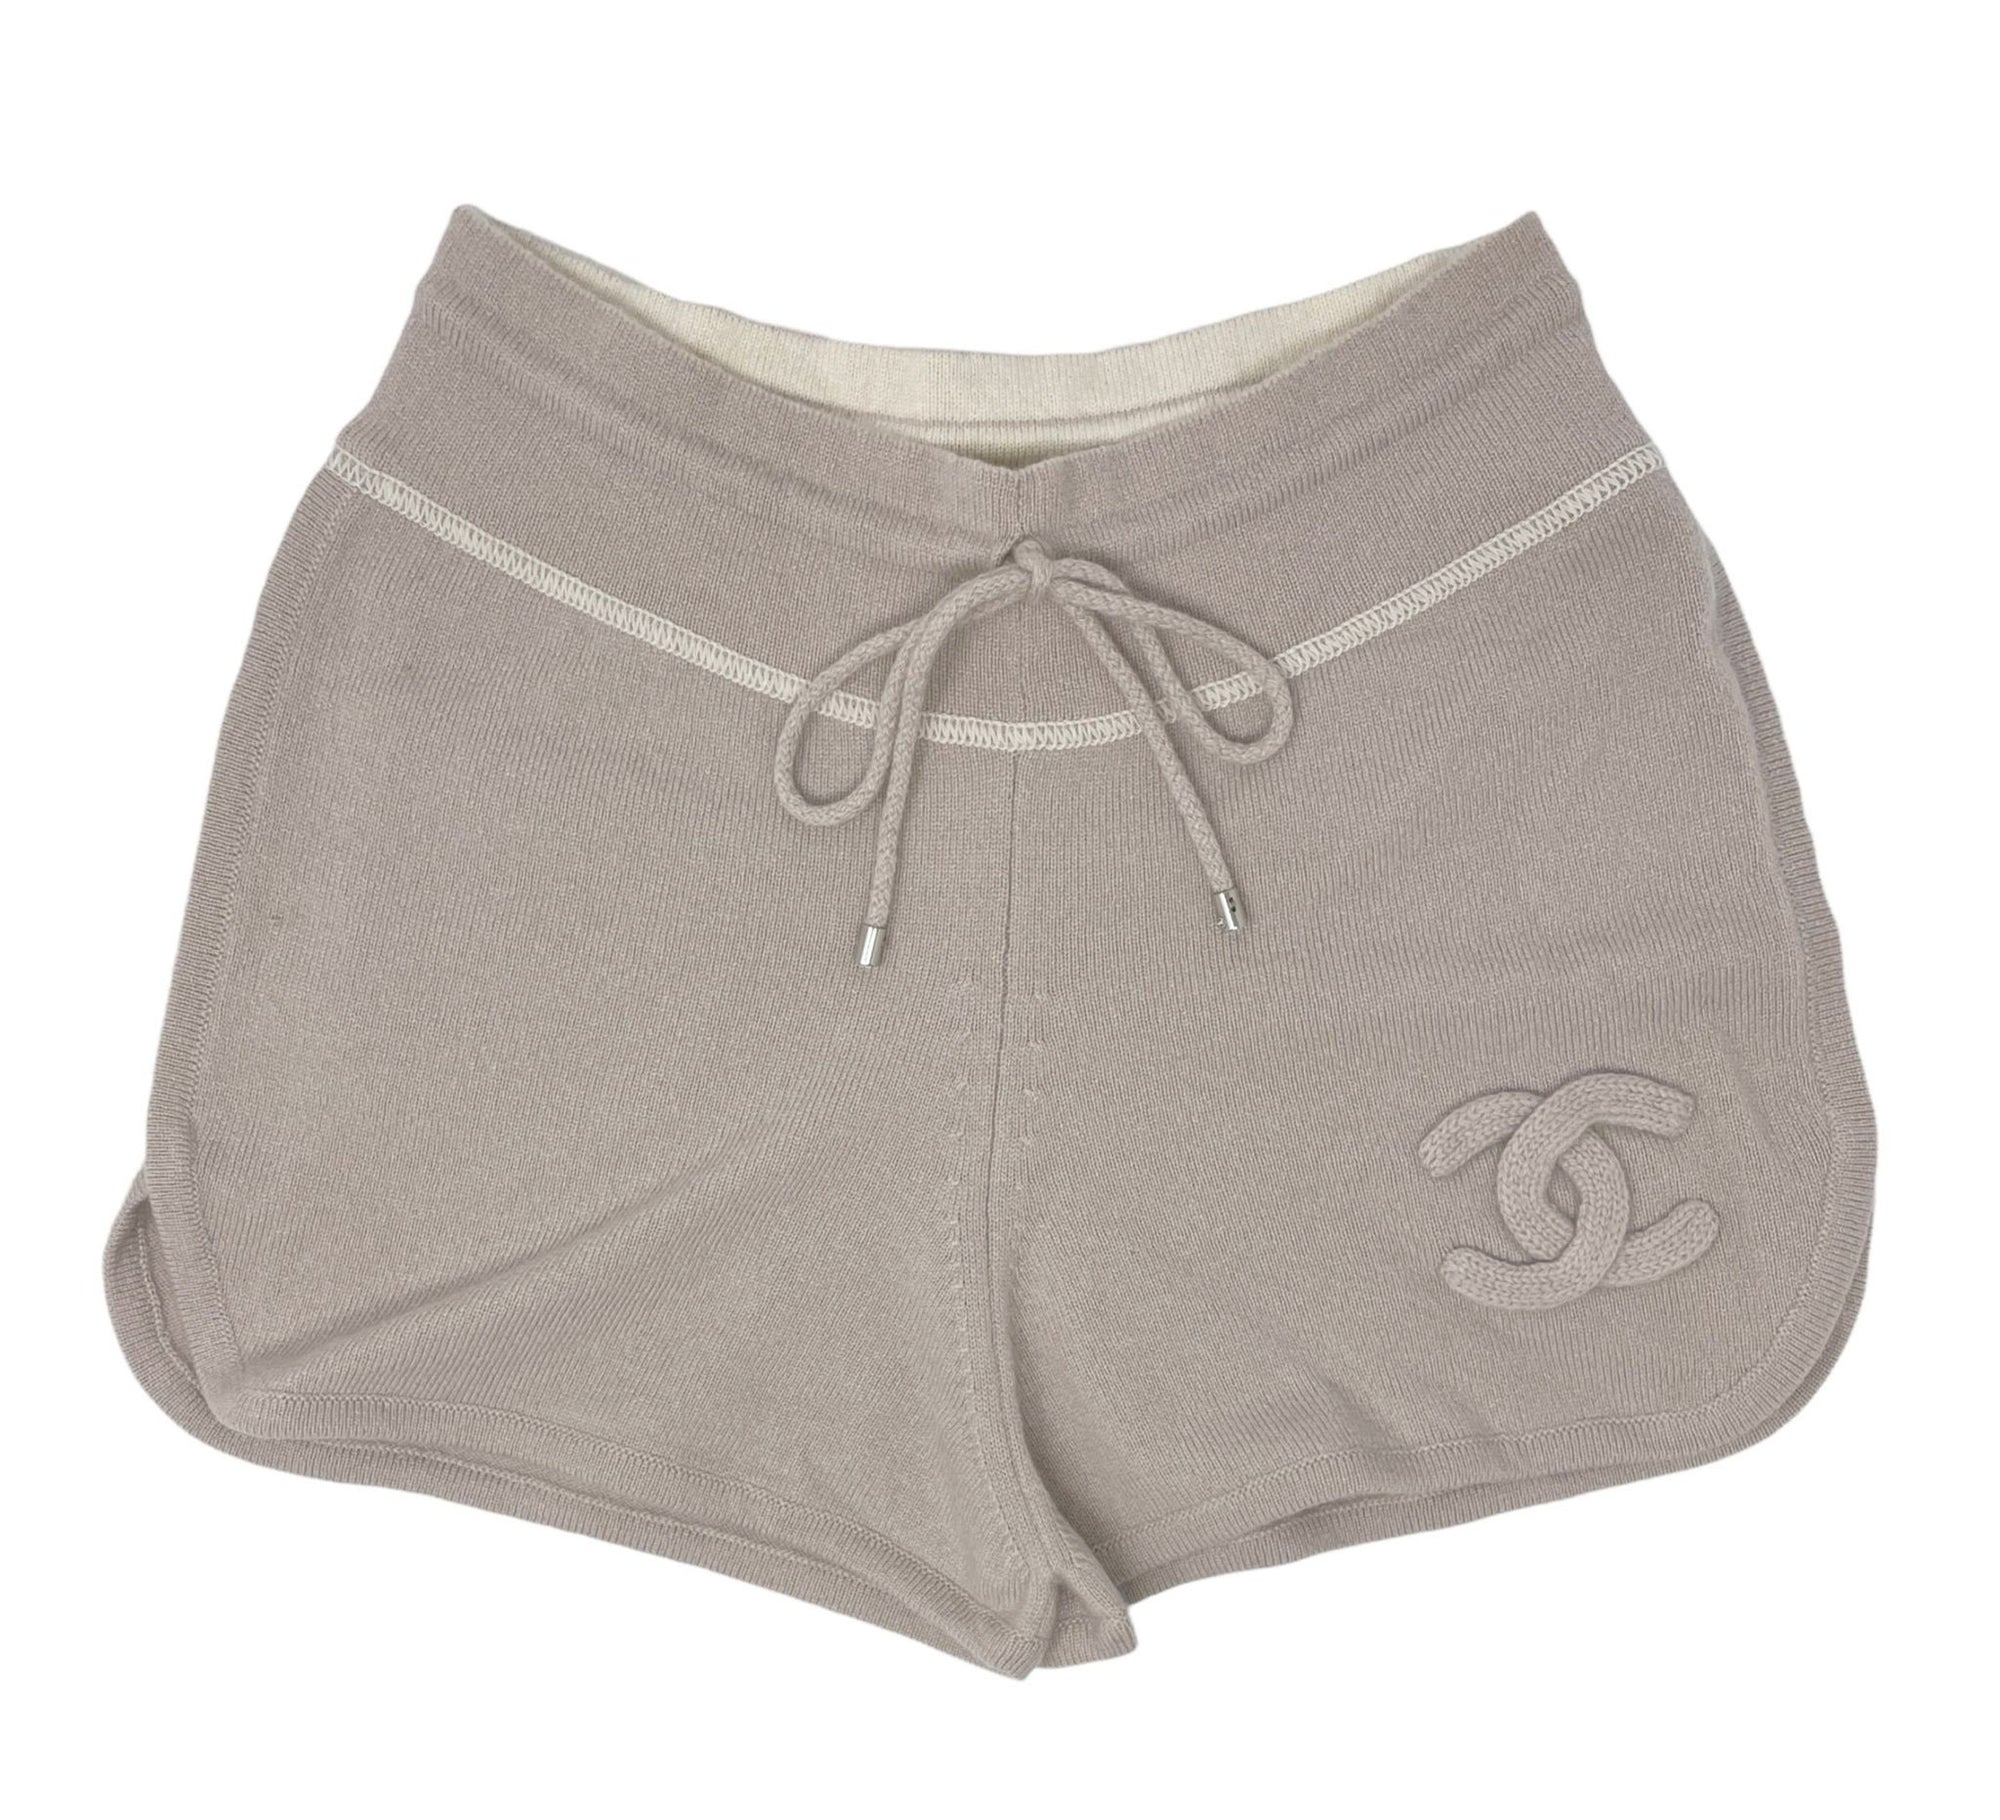 Chanel Tan Cashmere Logo Shorts